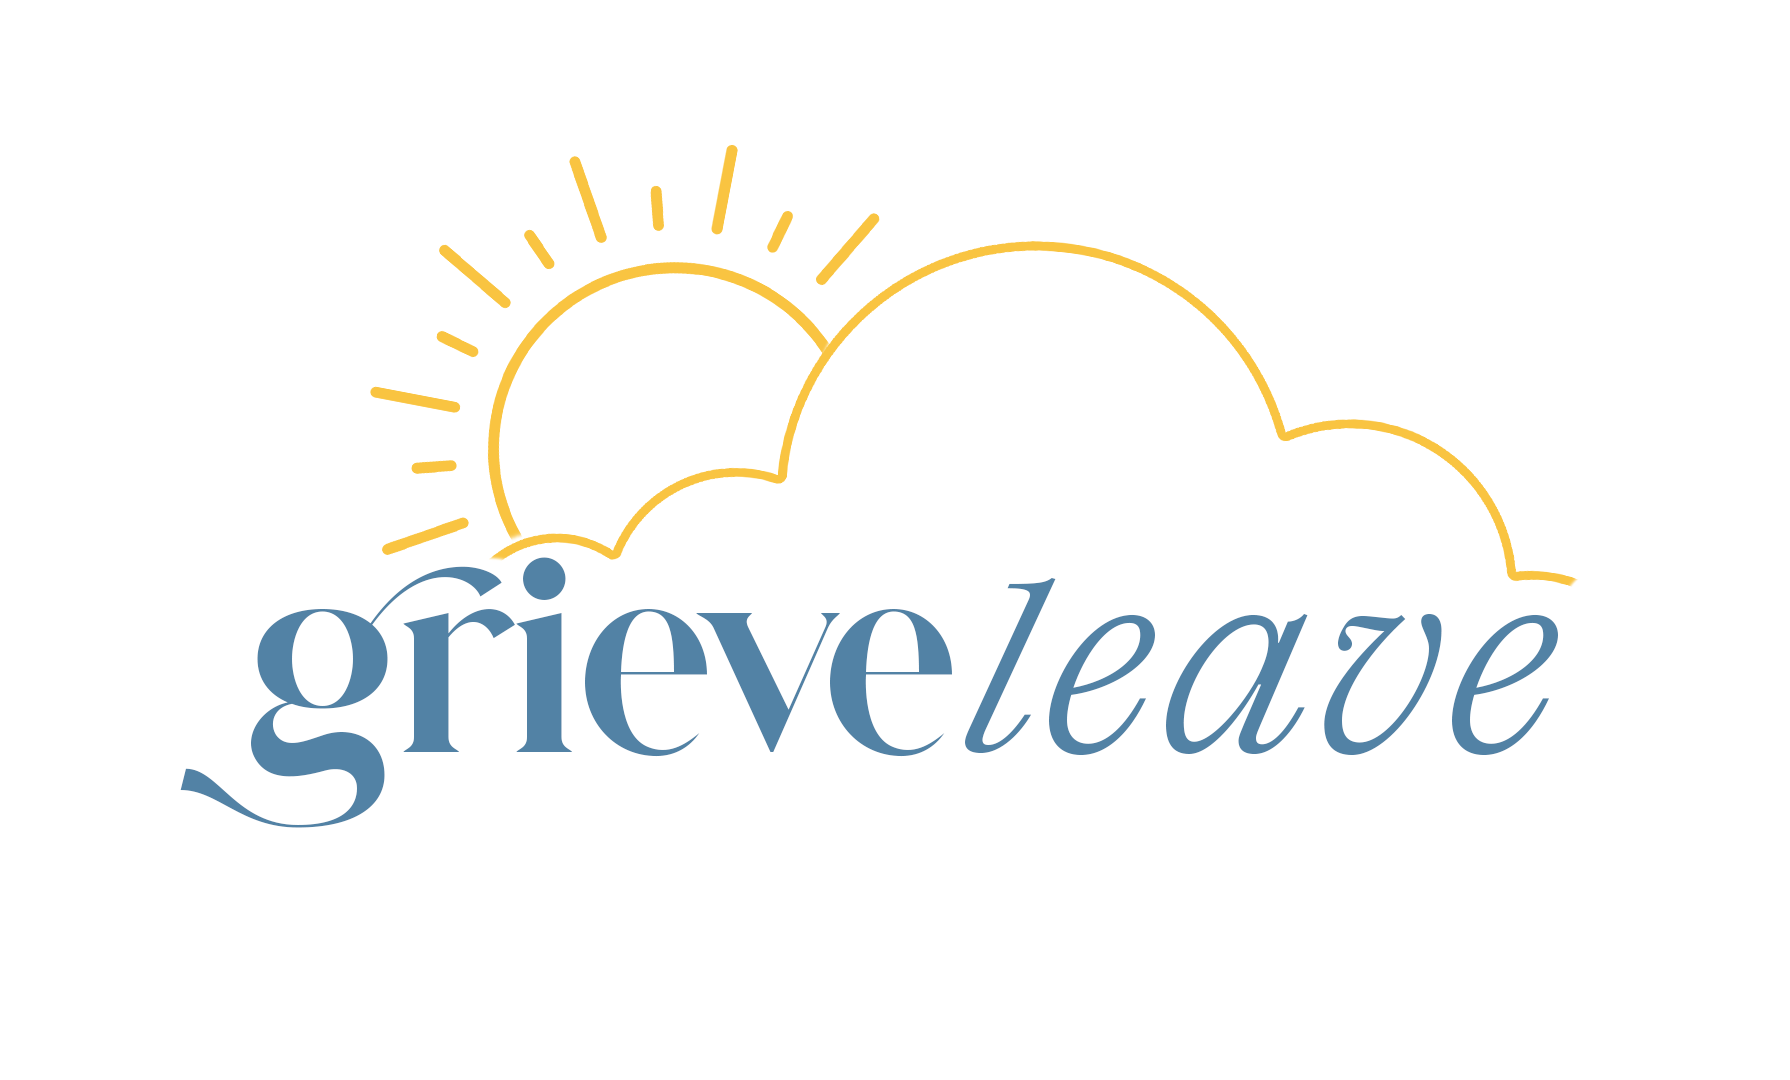 grieve leave logo